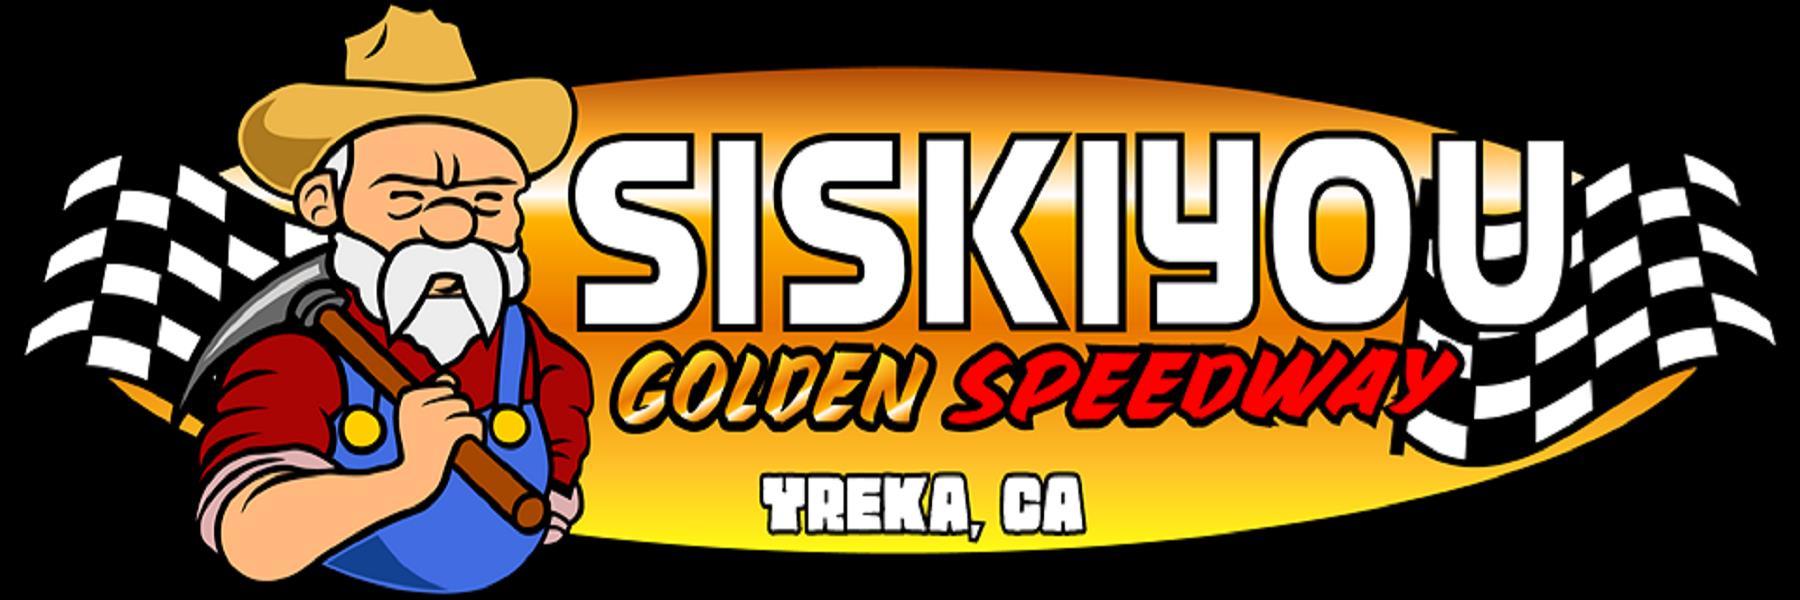 8/28/2021 - Siskiyou Golden Speedway